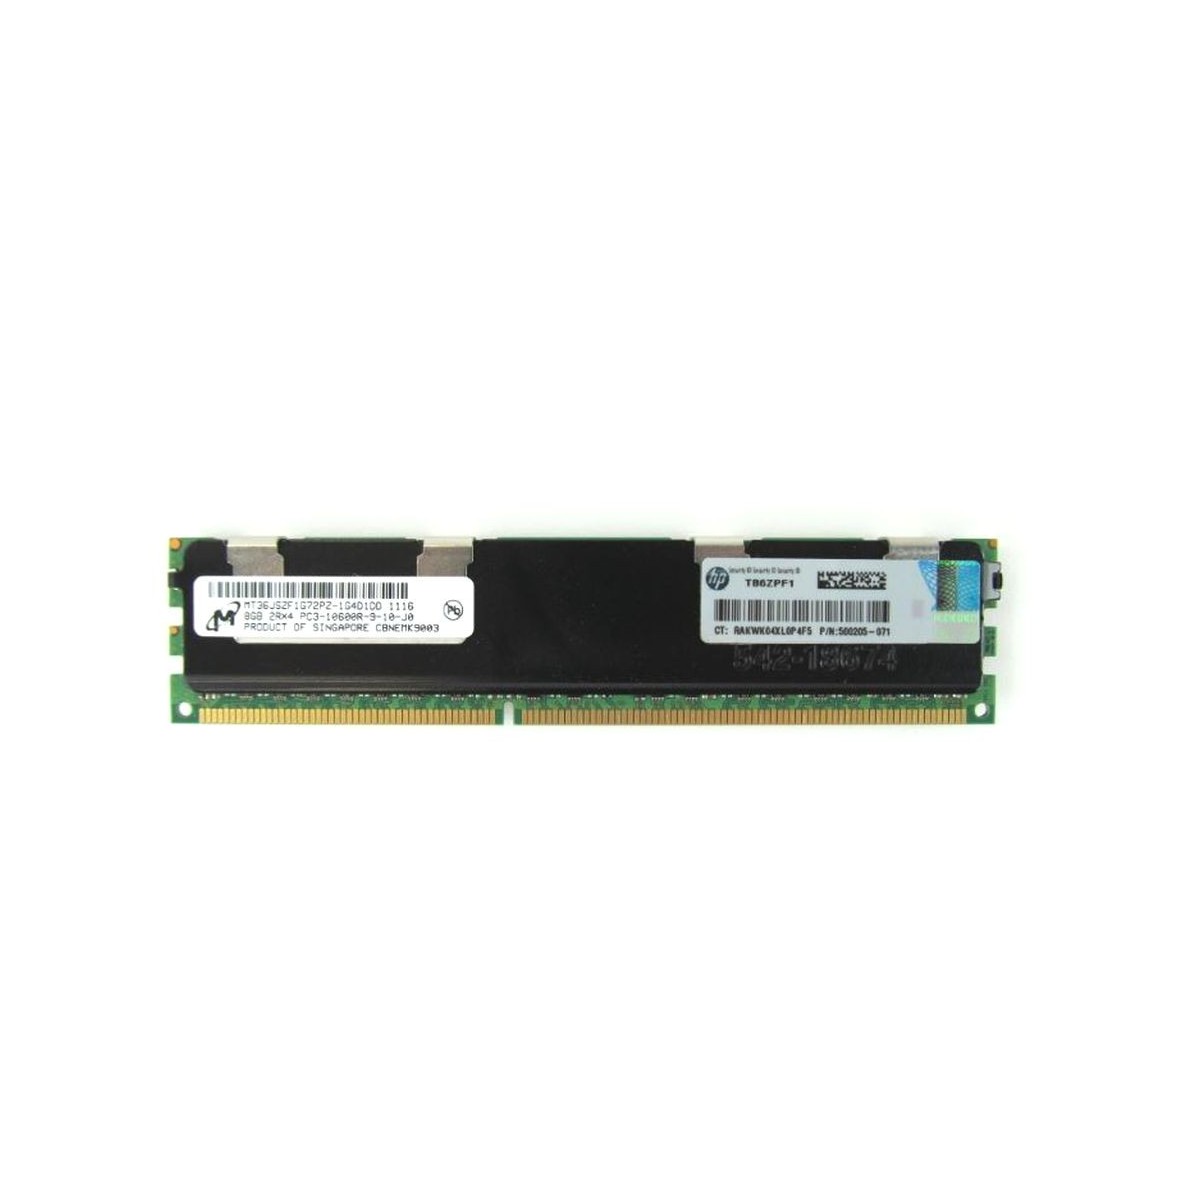 HP MICRON 8GB 2Rx4 PC3-10600R G6-G7 500205-071